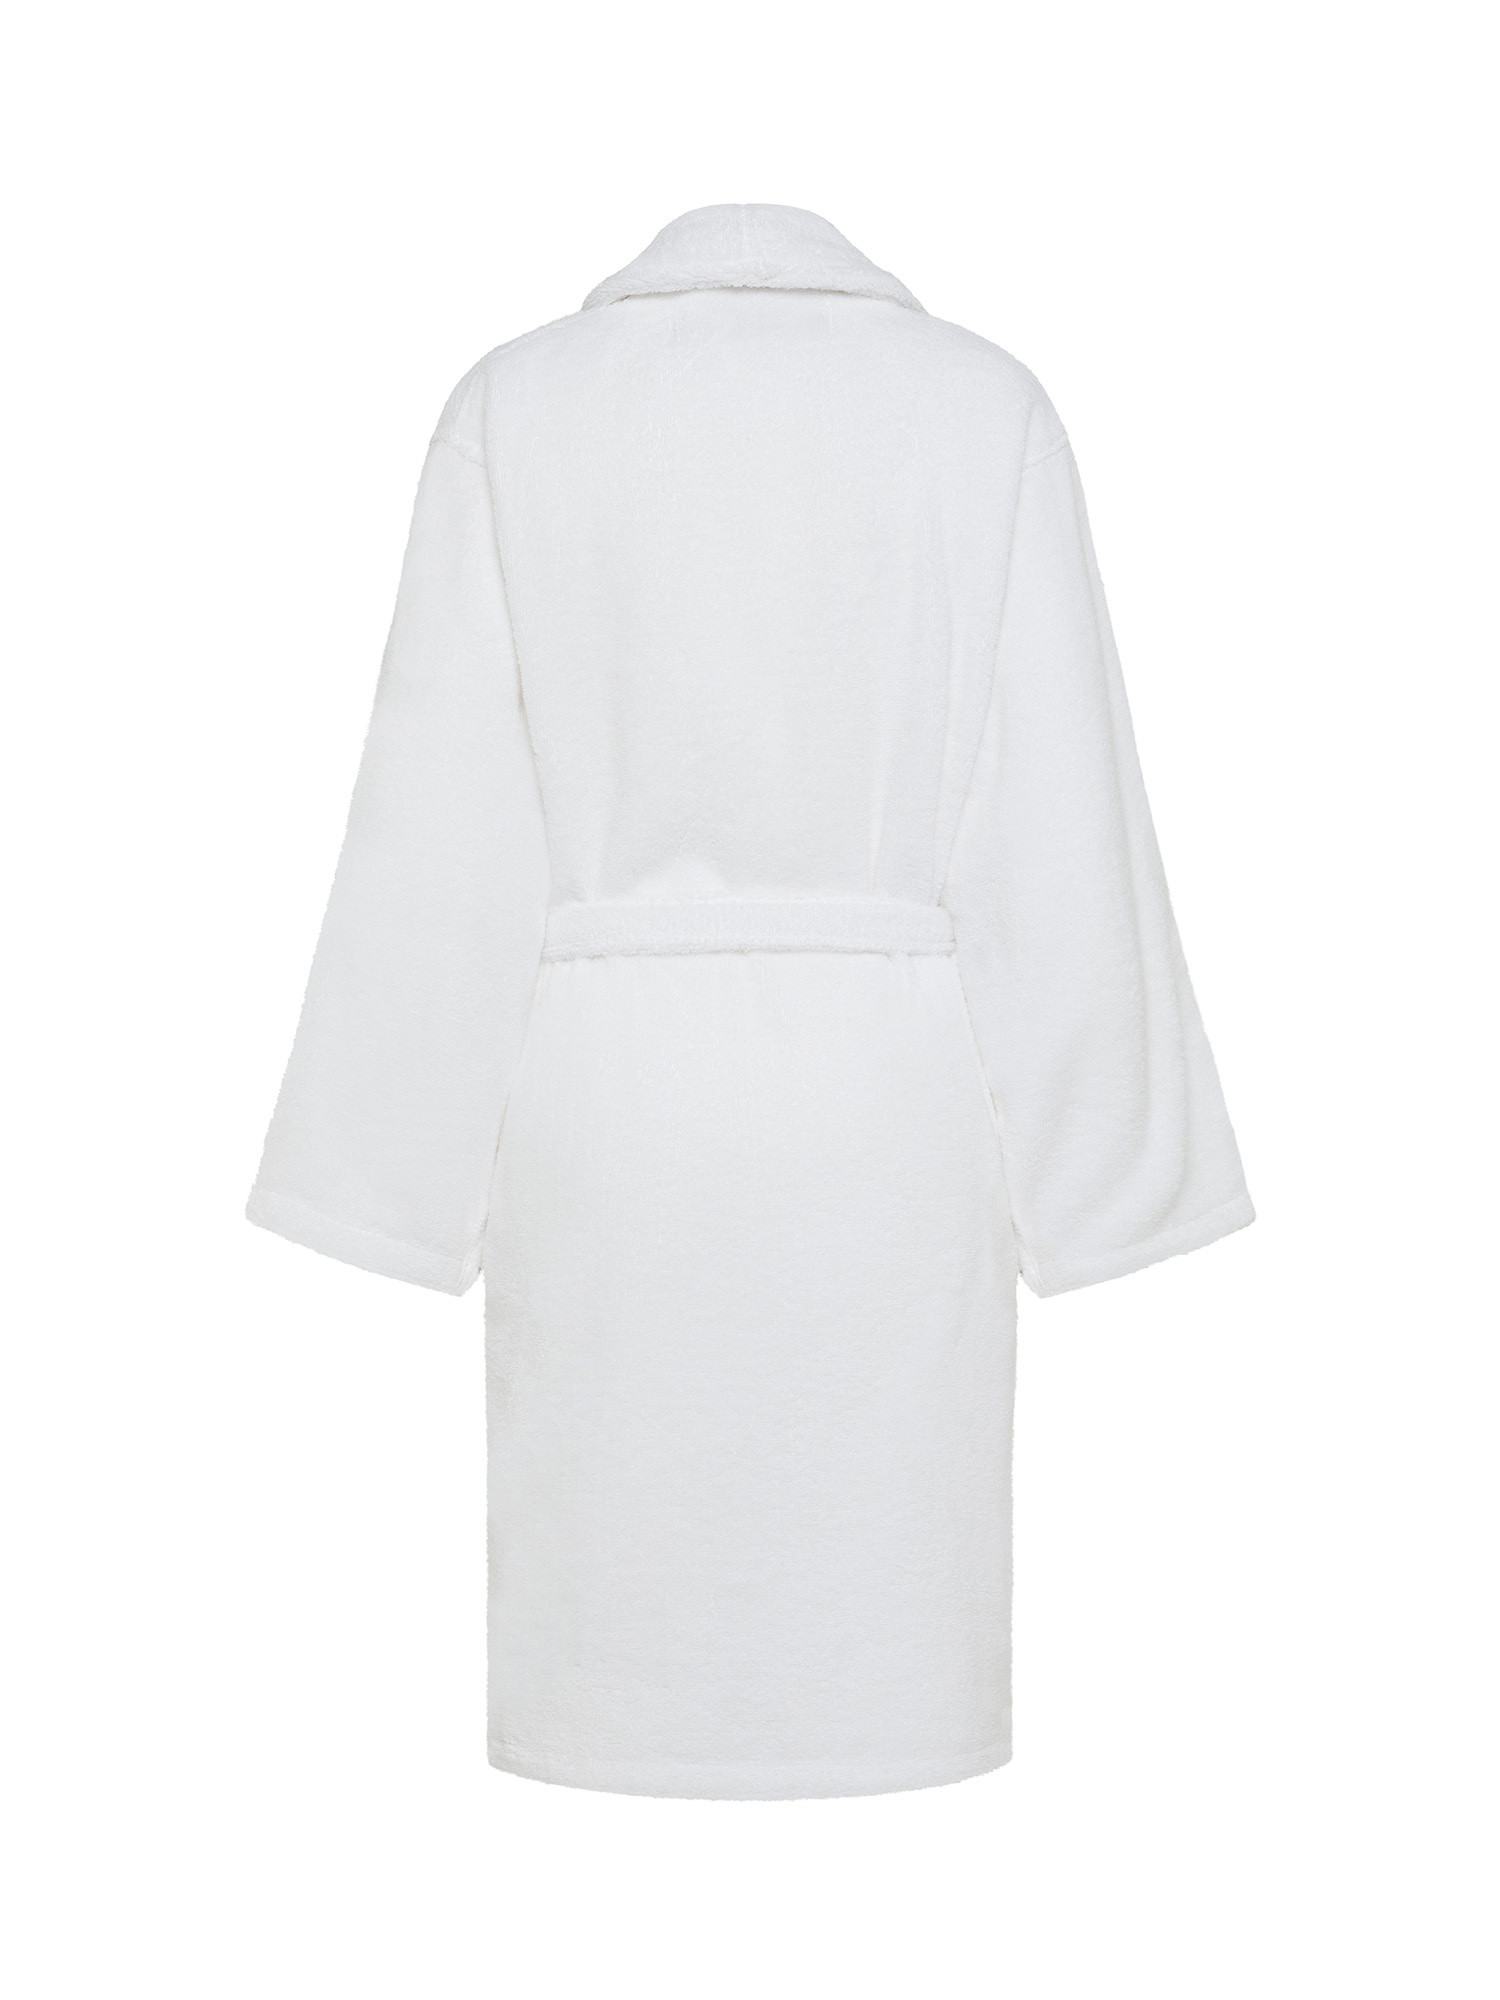 Cotton terry bathrobe, White, large image number 1